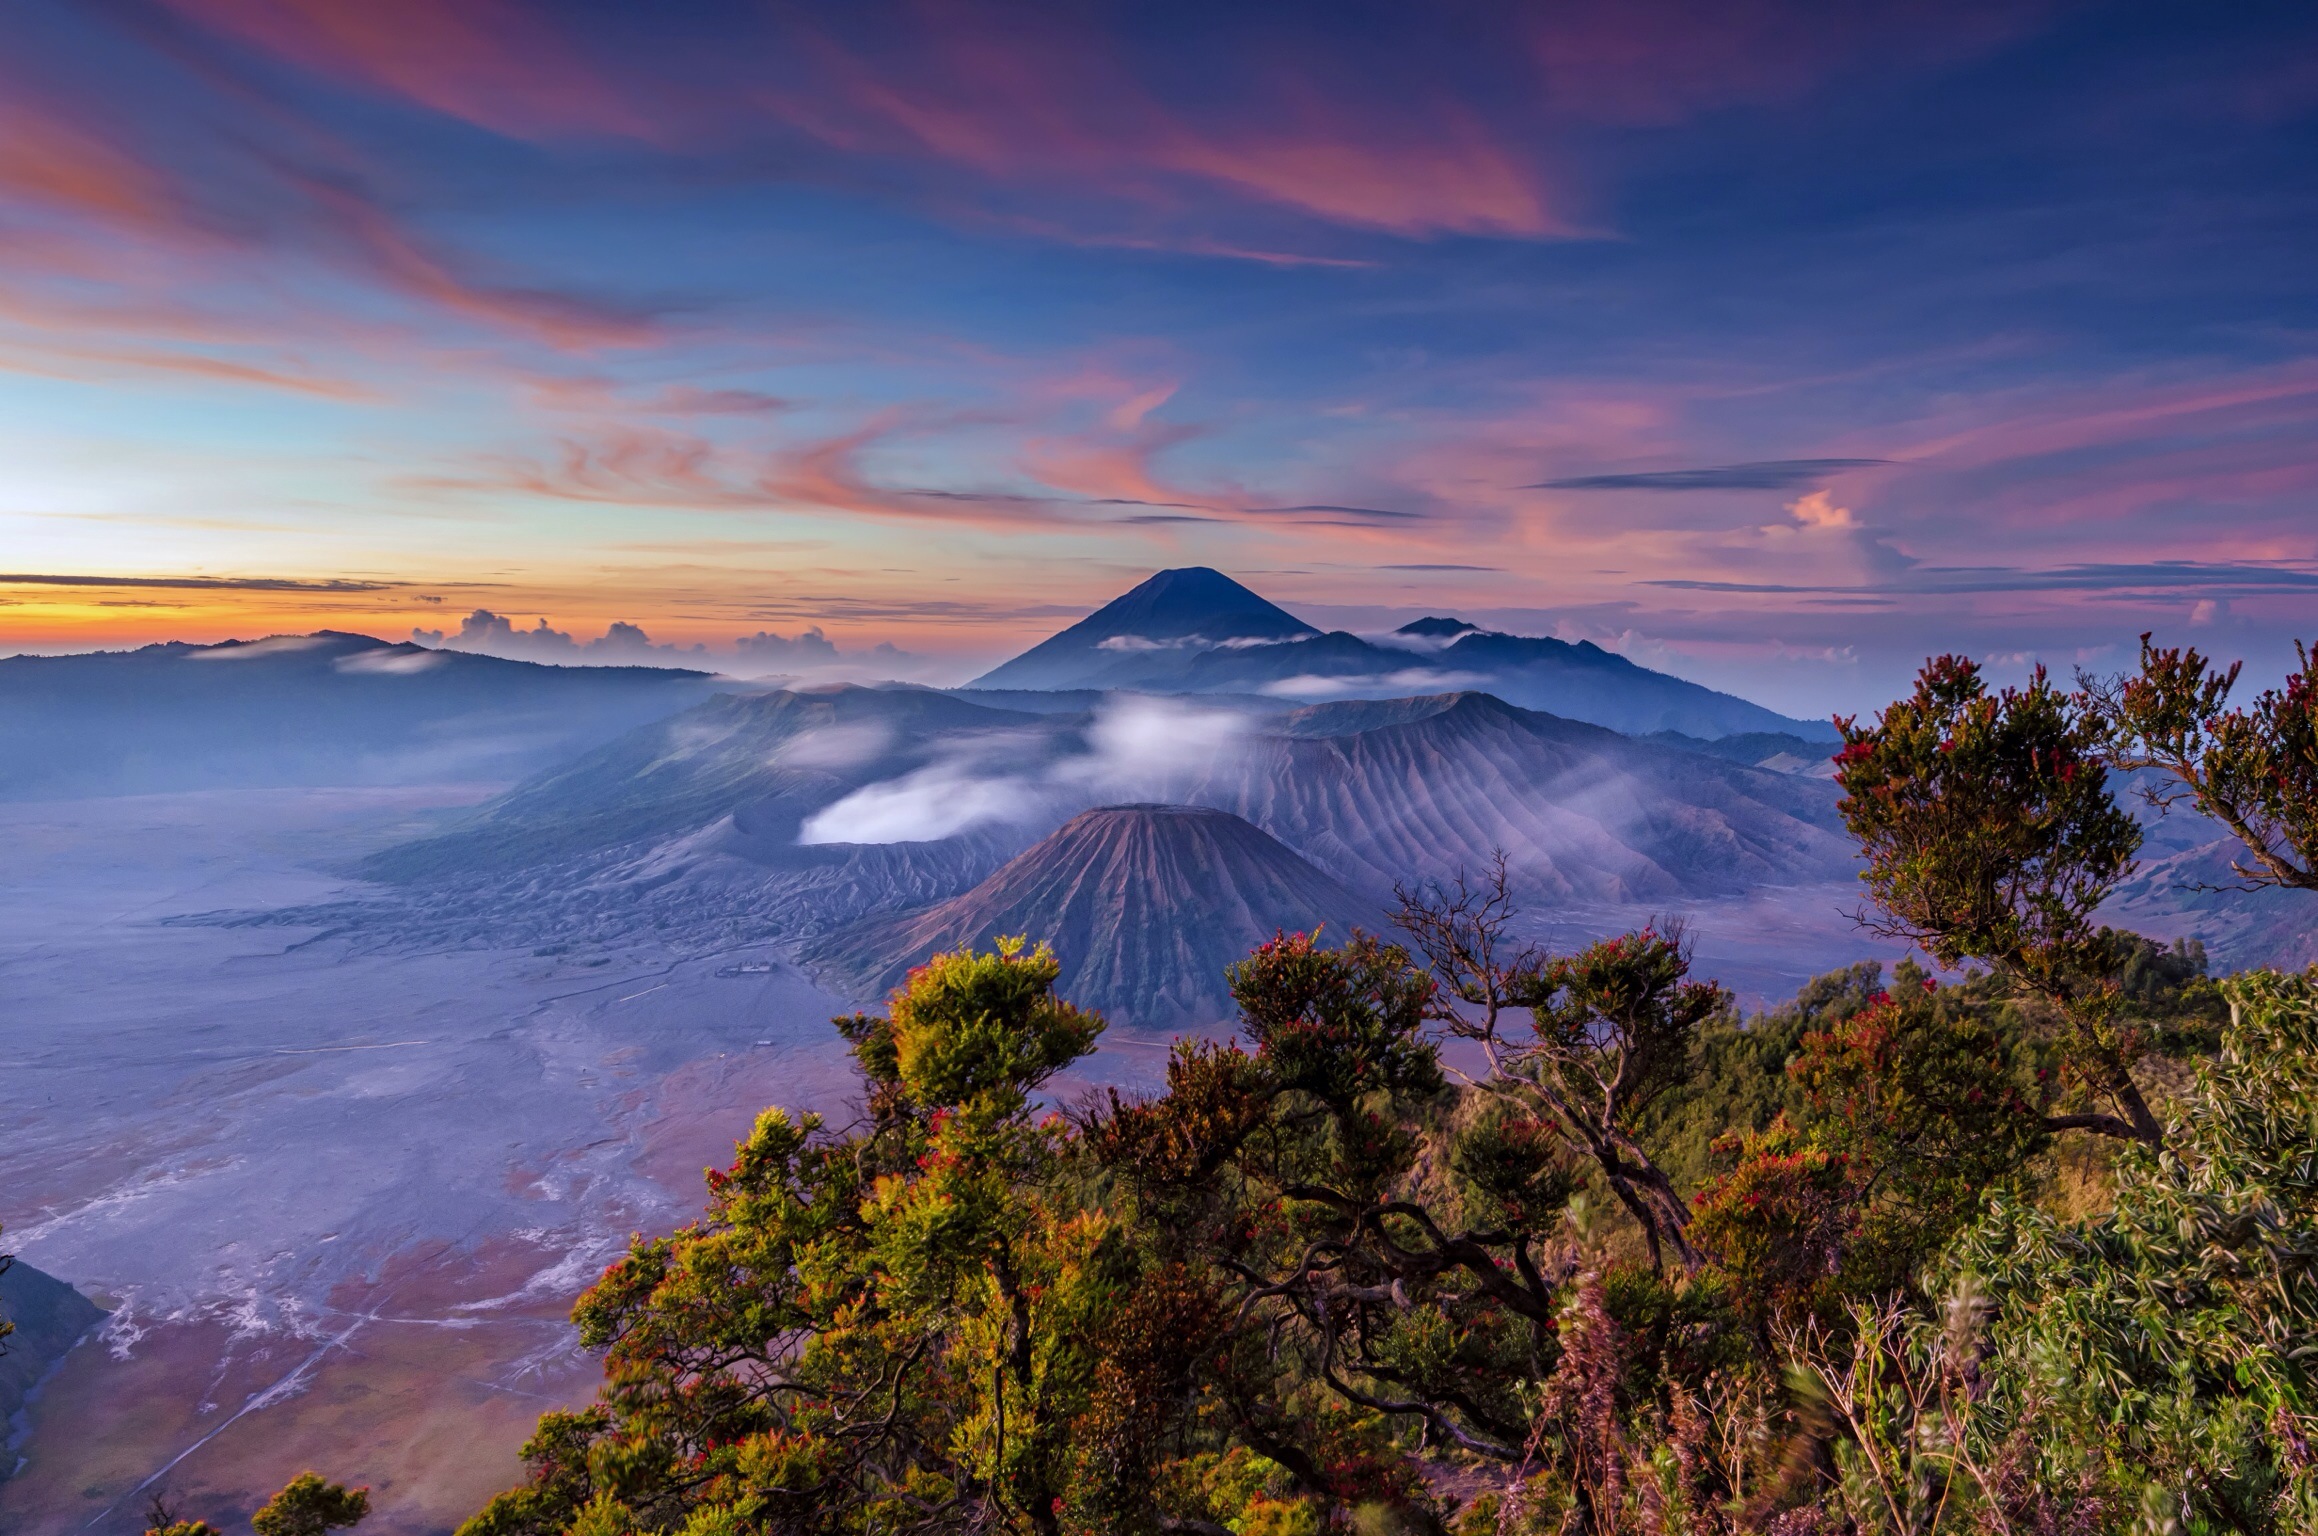 358443 скачать обои восход солнца, индонезия, земля/природа, гора бромо, ява (индонезия), ландшафт, стратовулкан, вулкан, вулканы - заставки и картинки бесплатно